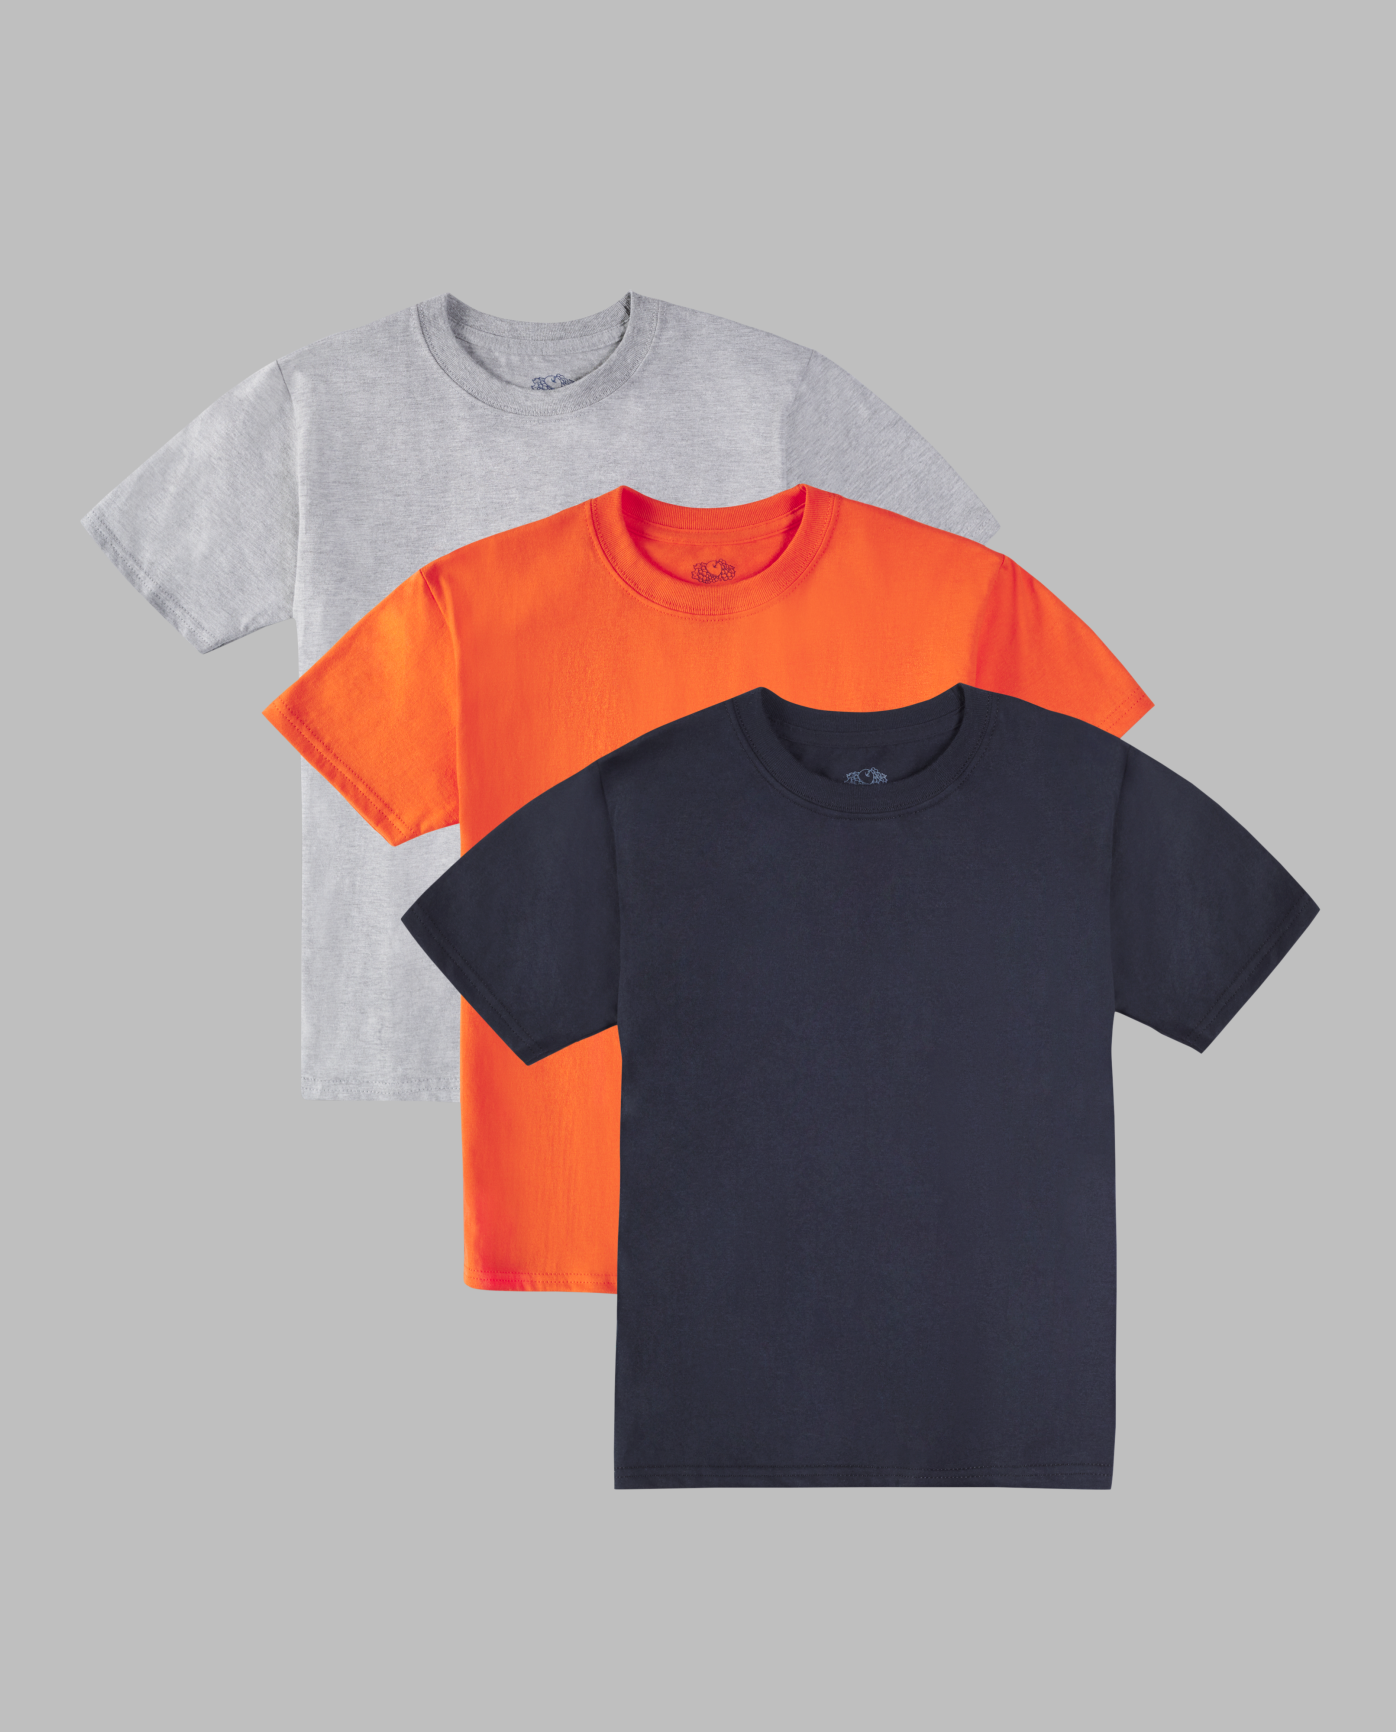 Super Soft Solid Multi-Color Short Sleeve Crew T-Shirt